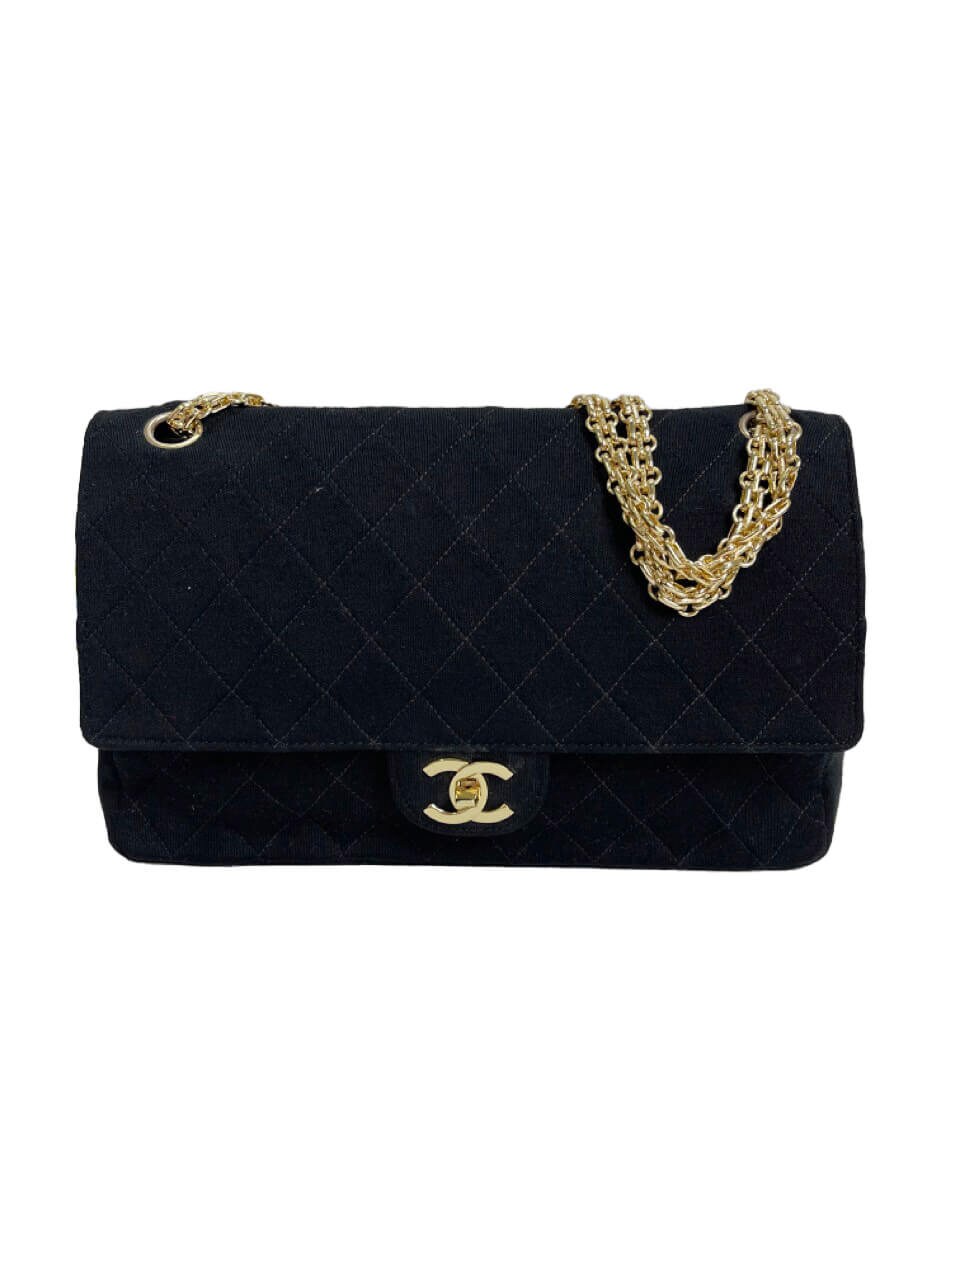 Chanel Jersey Bag 